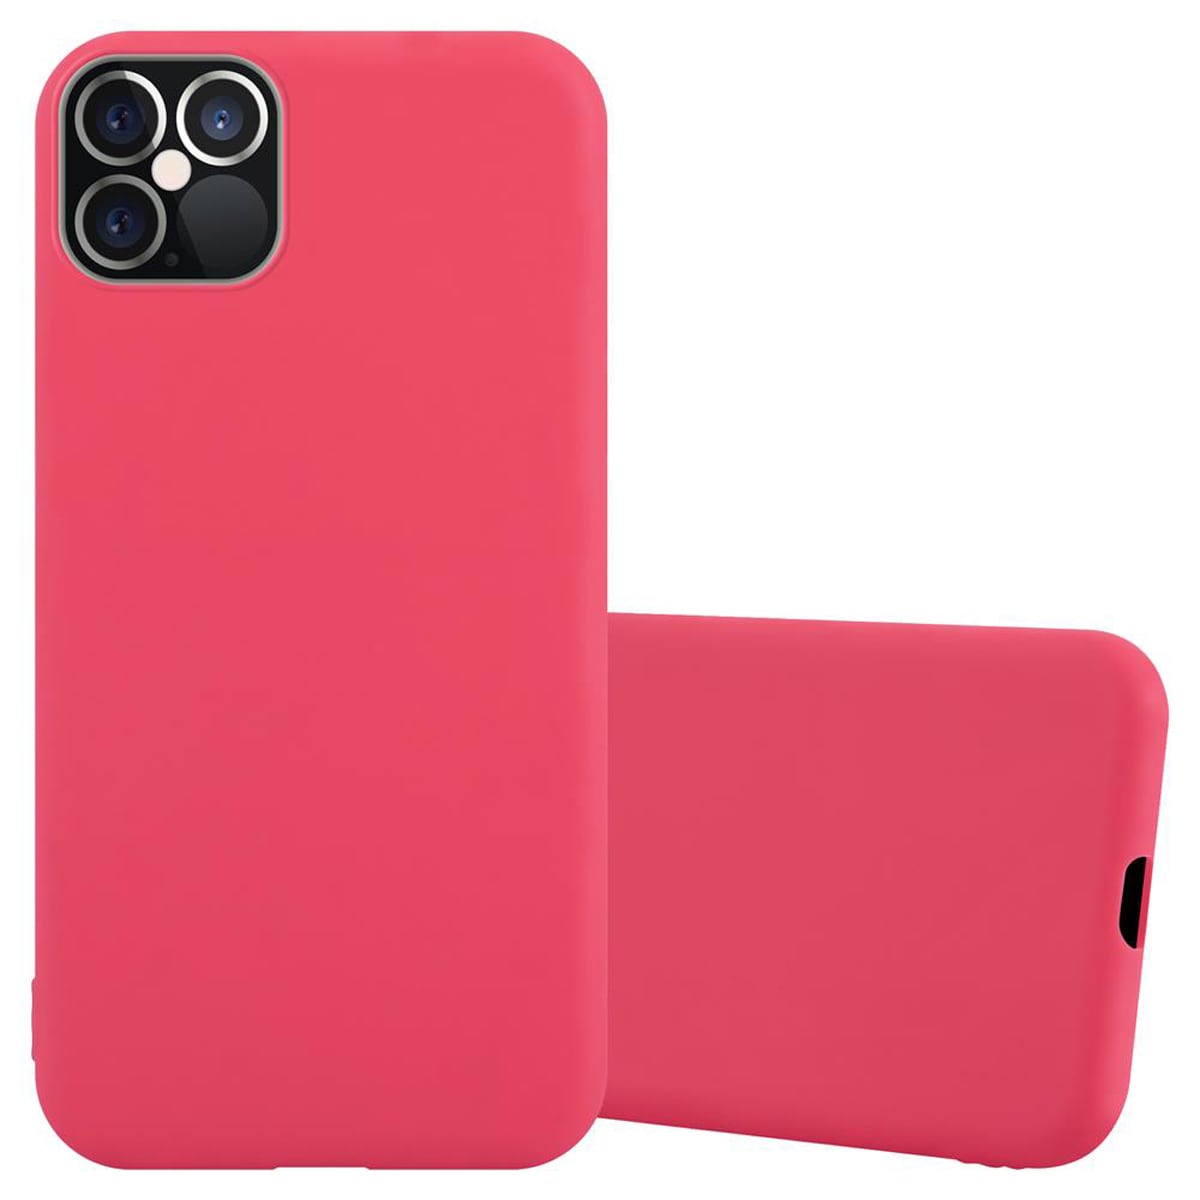 iPhone 12 / 12 PRO silikondeksel cover (rød) - Elkjøp